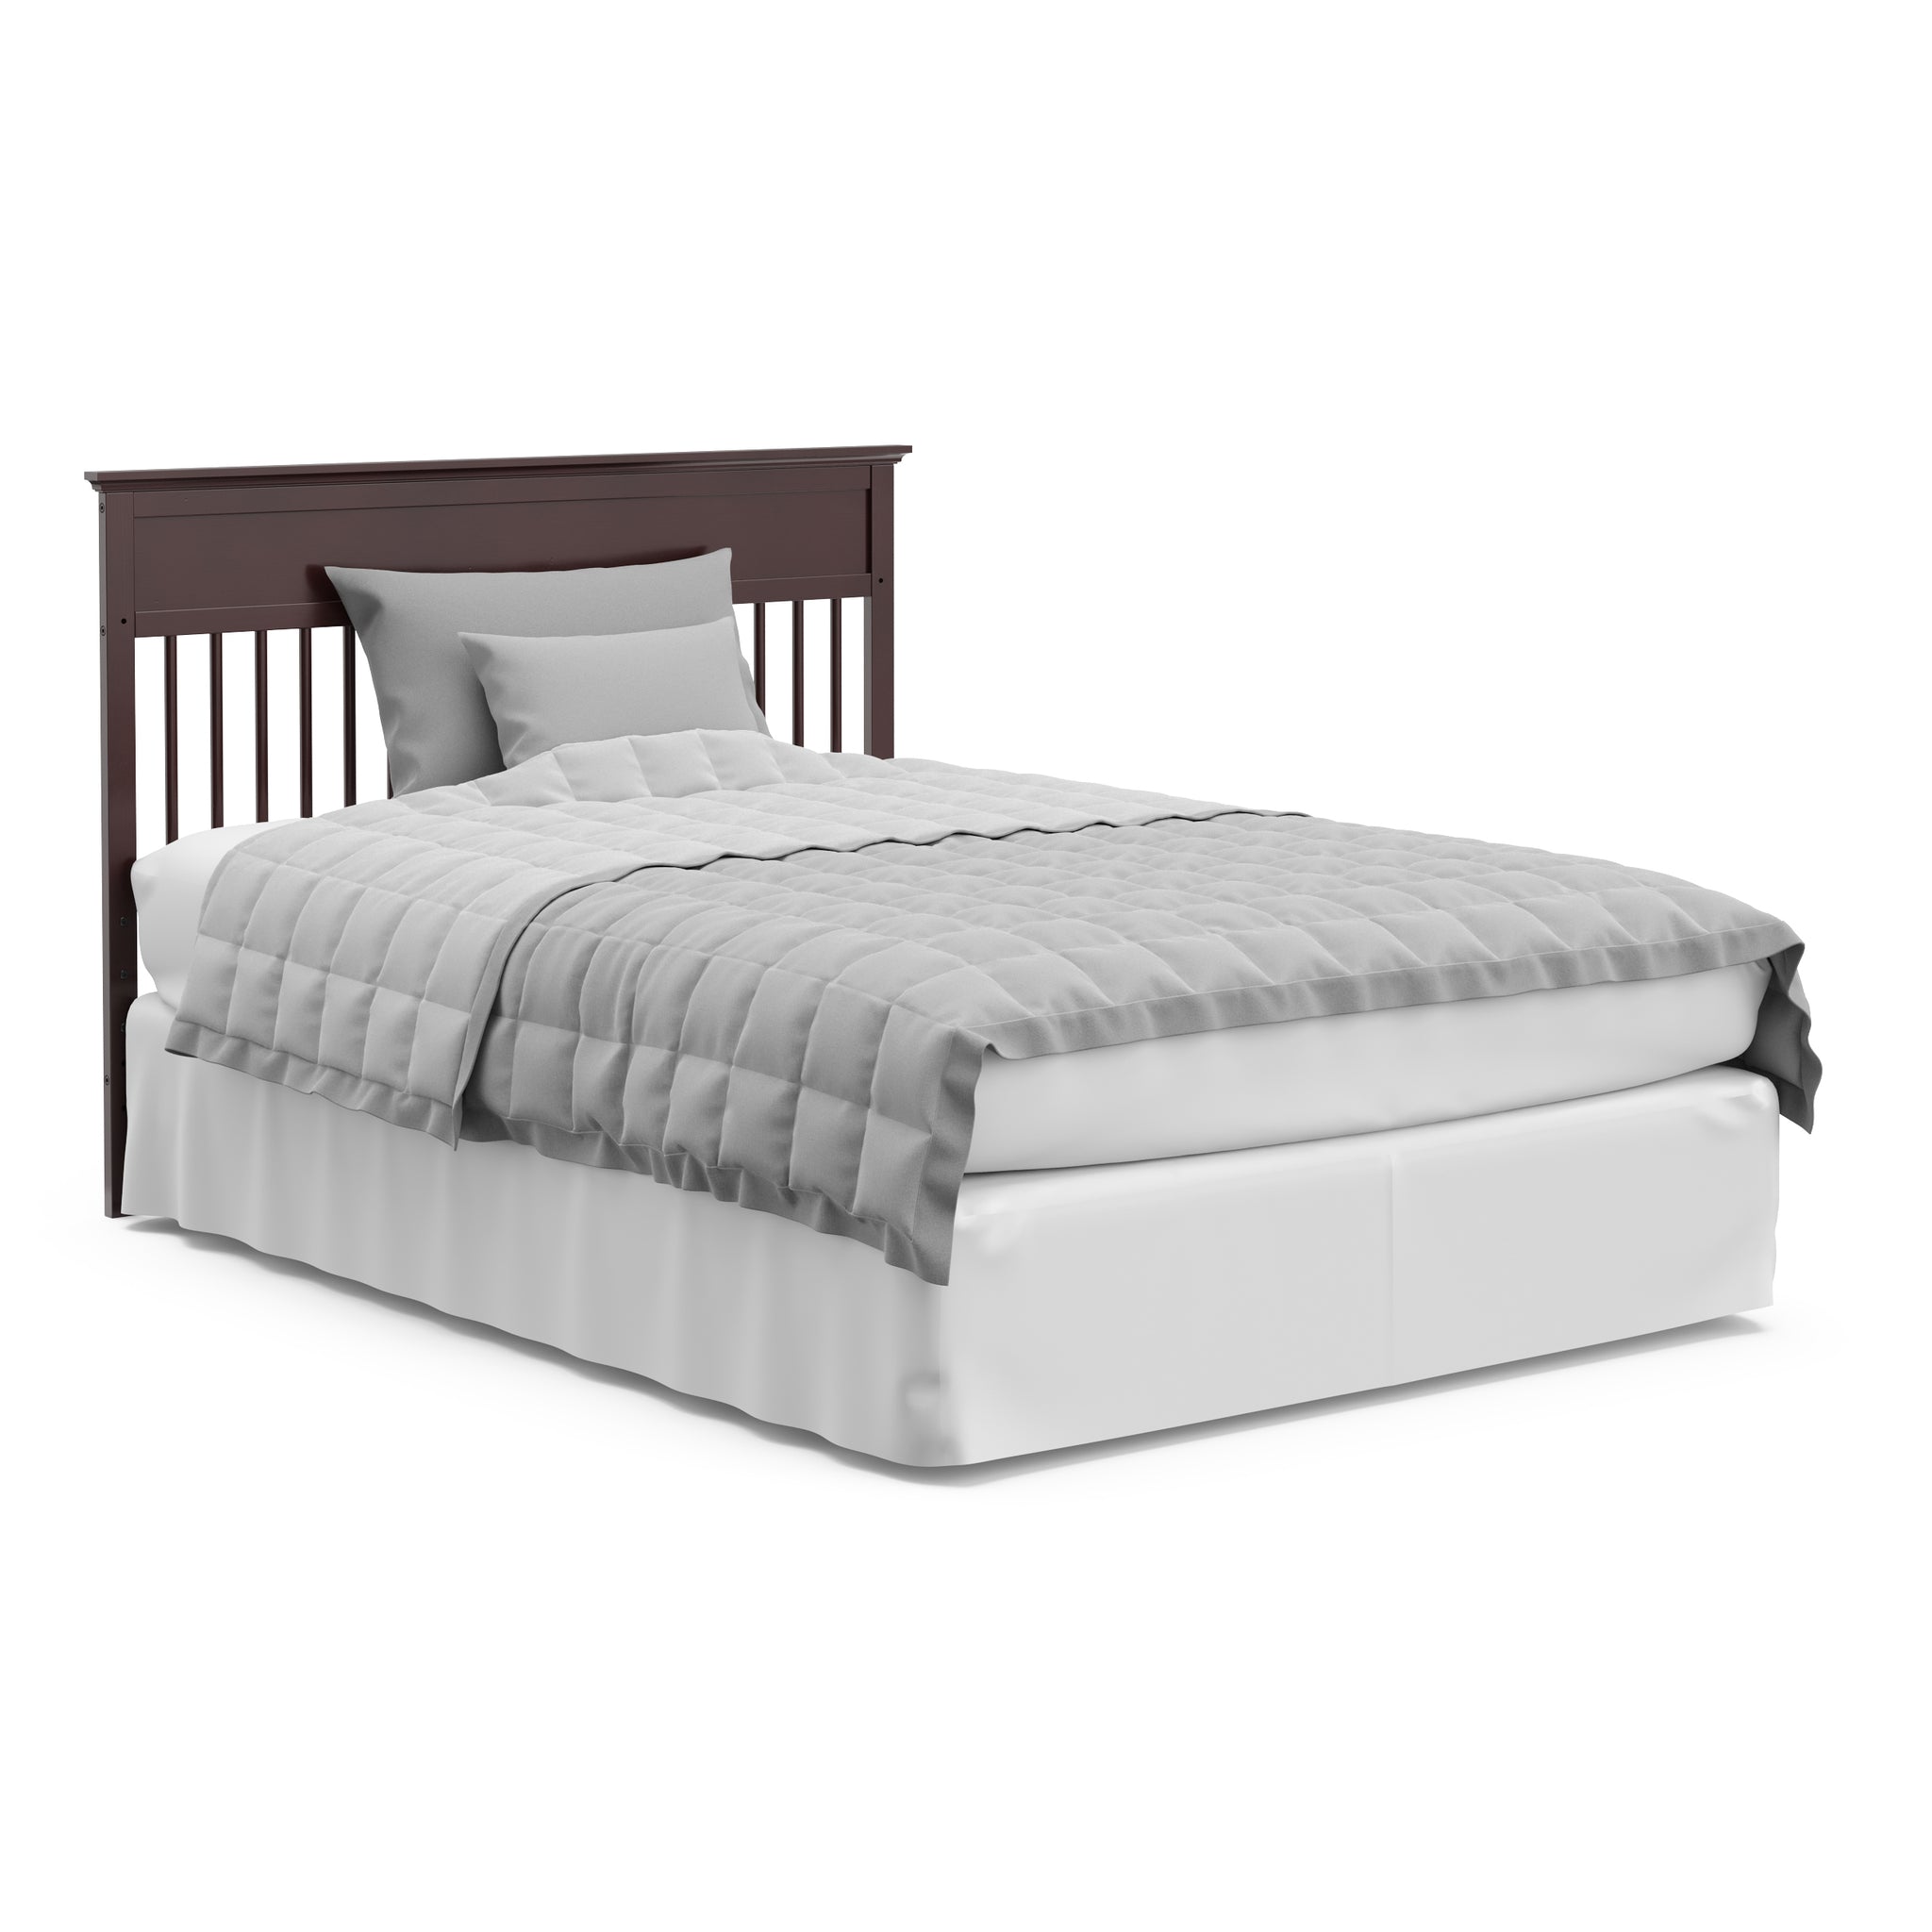 espresso crib in full-size bed with headboard conversion